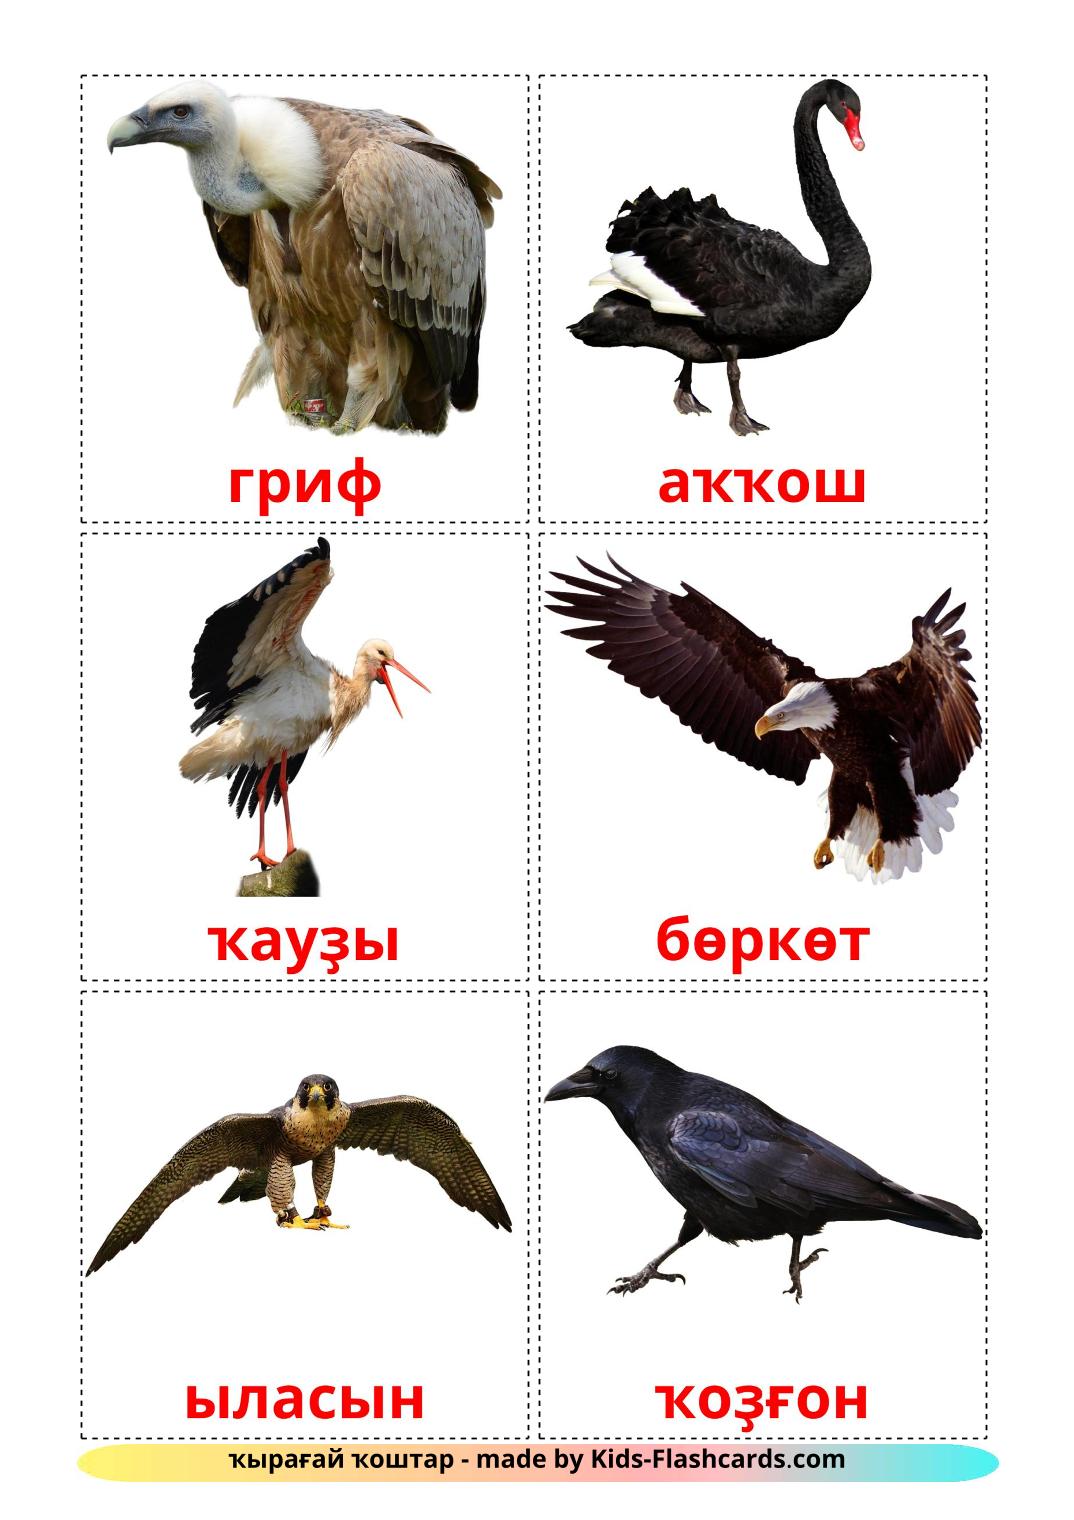 Uccelli selvaggi - 18 flashcards bashkir stampabili gratuitamente